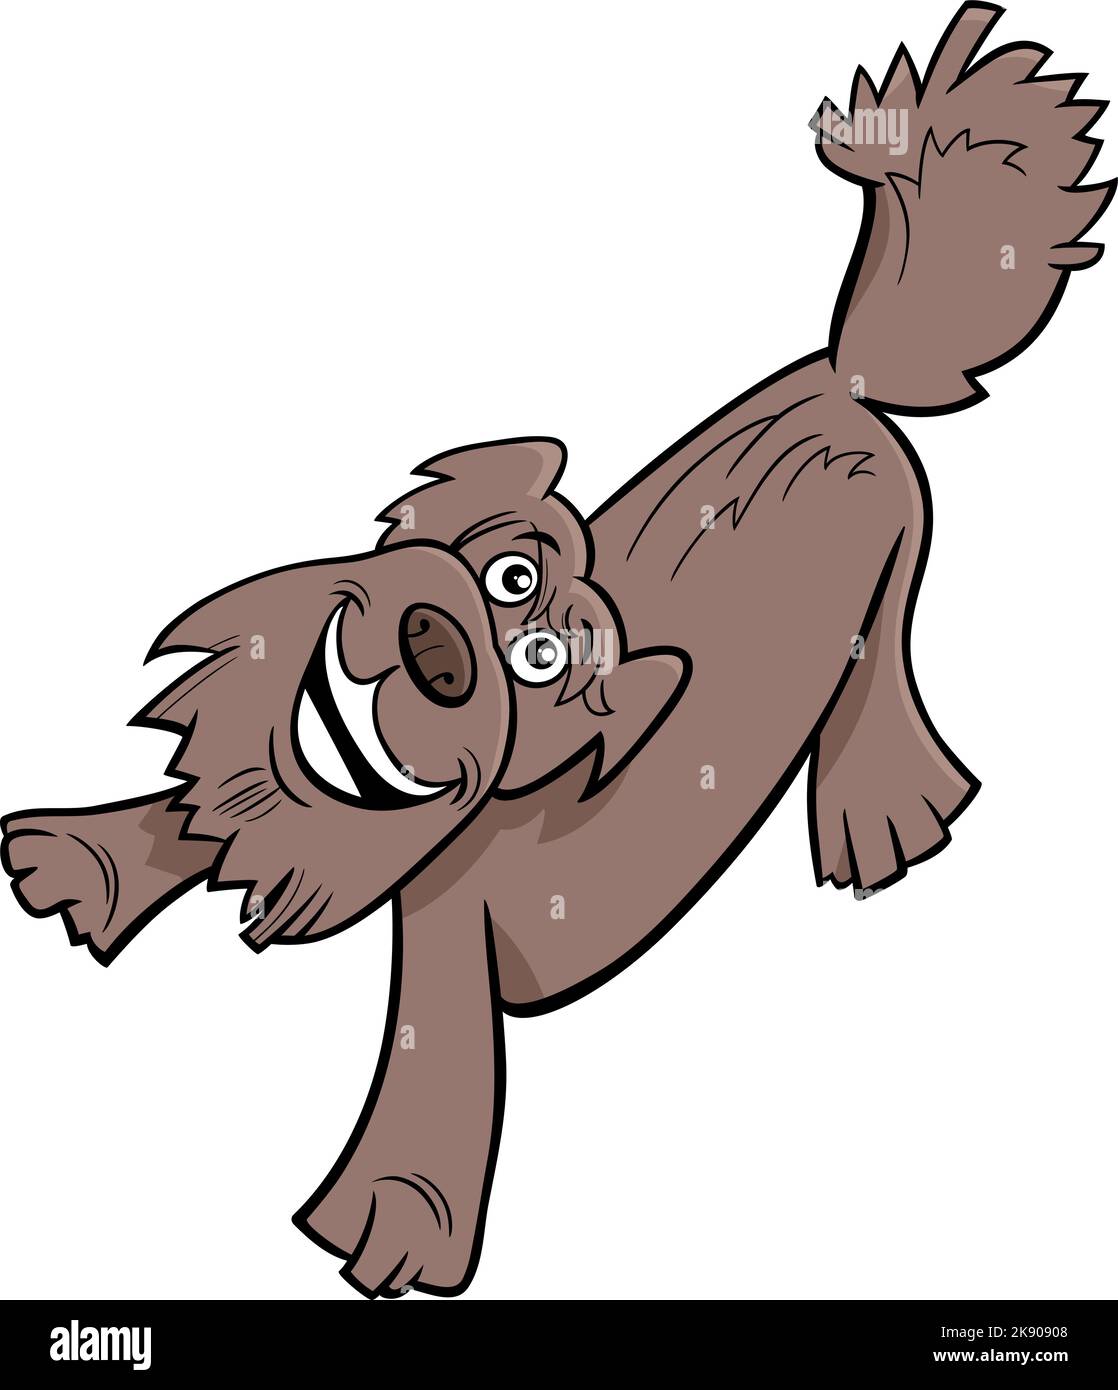 Cartoon illustration of funny brown shaggy dog comic animal character looking up Stock Vector